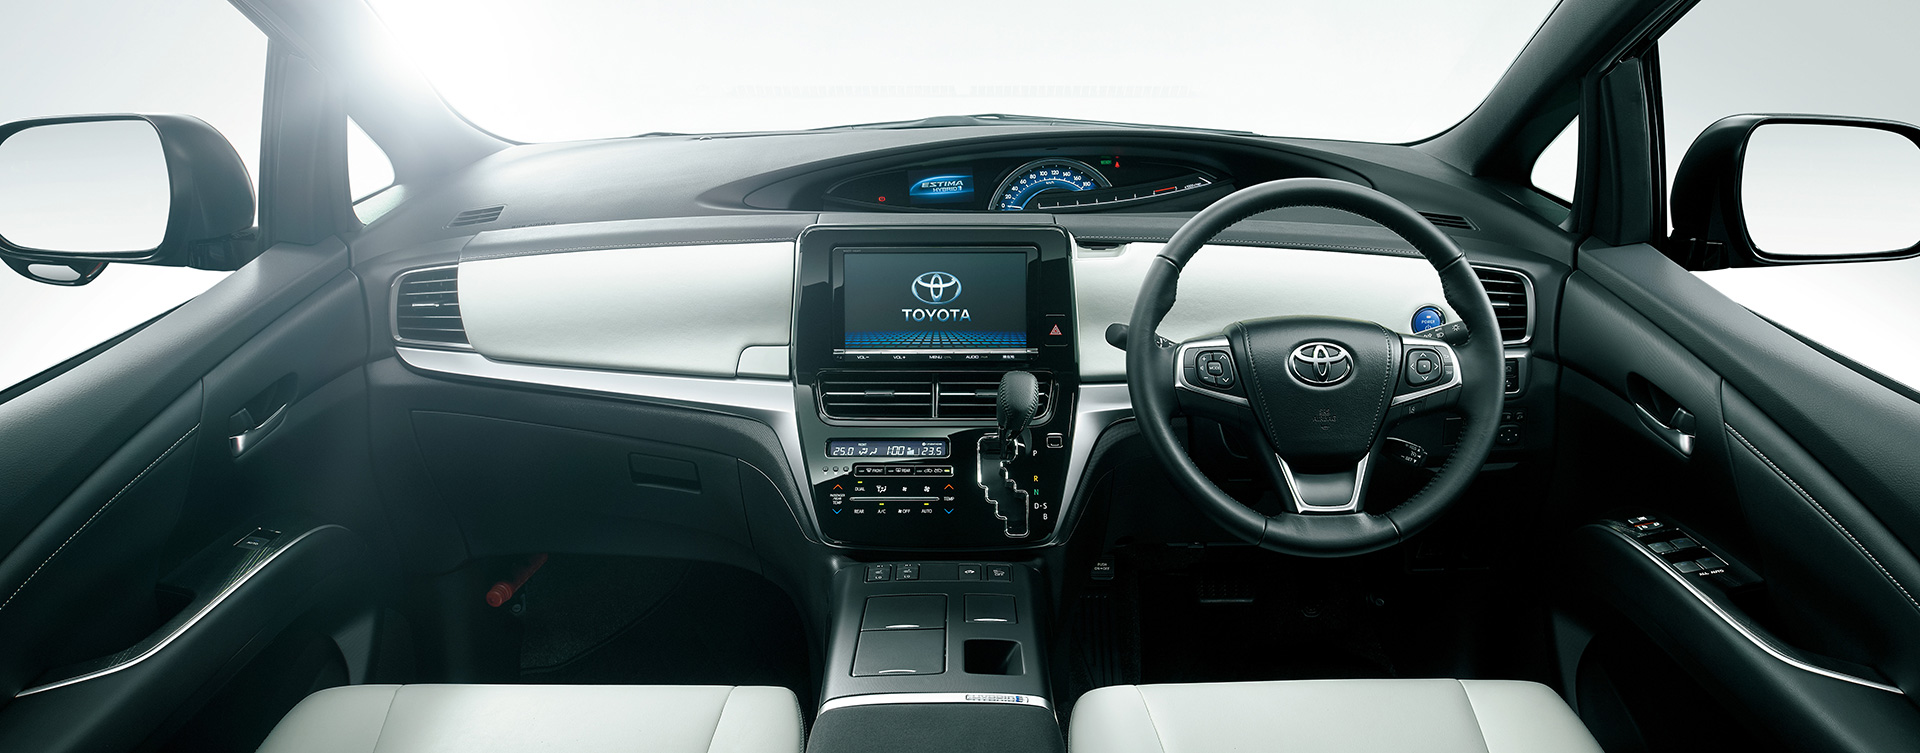 2016 Toyota Estima Hybrid (facelift) dashboard